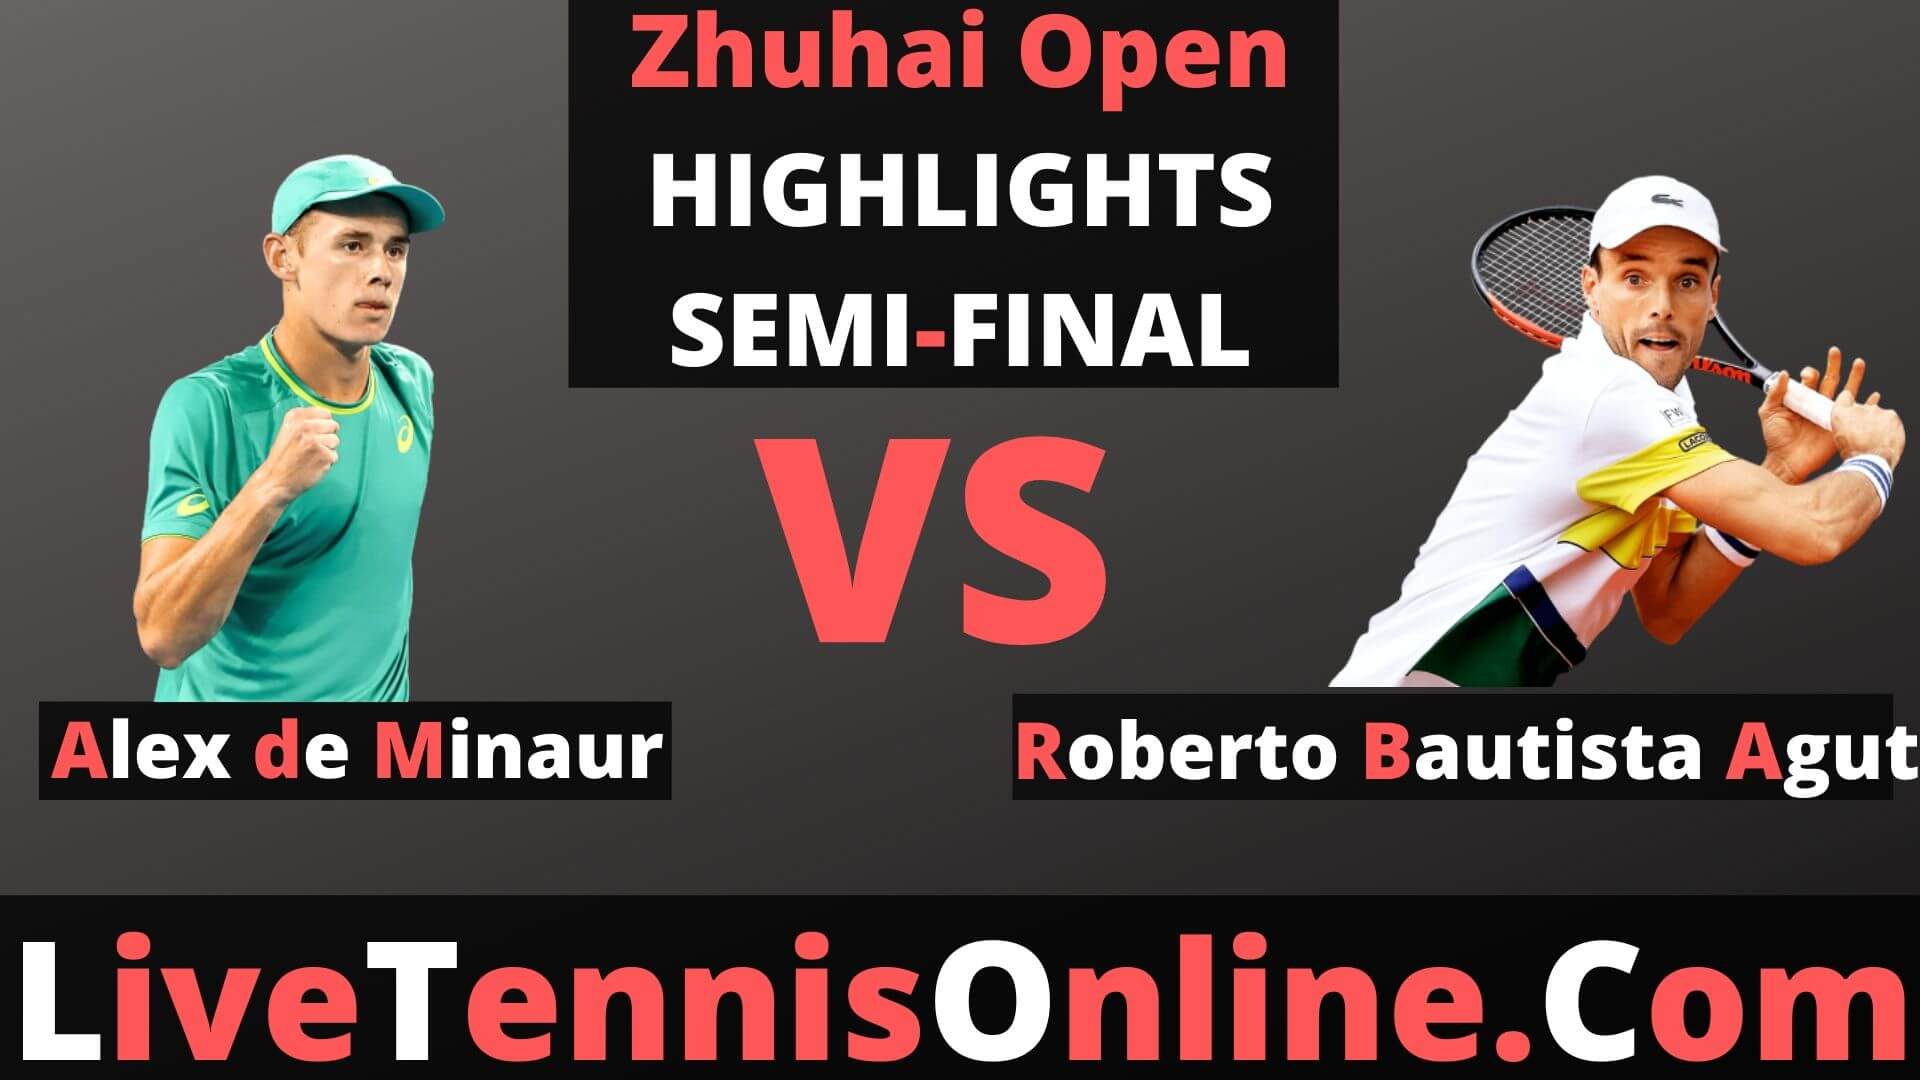 Alex de Minaur Vs Roberto Bautista Agut Highlights 2019 Zhuhai Open Final